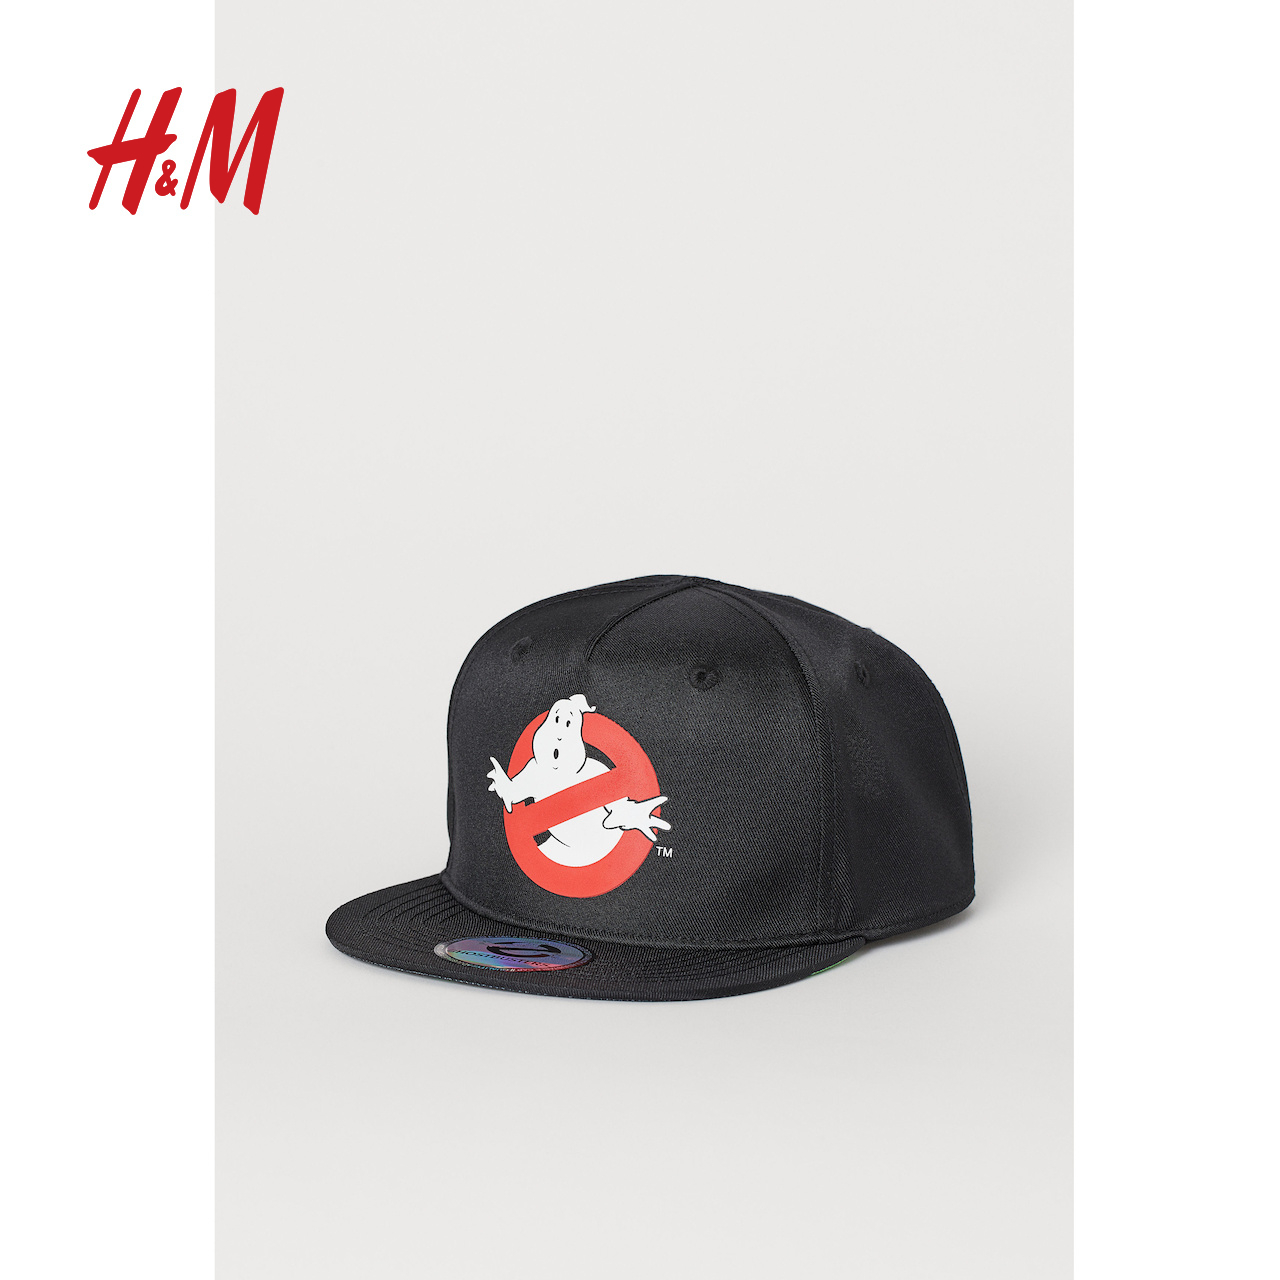 H&M HM0694658 男童帽子